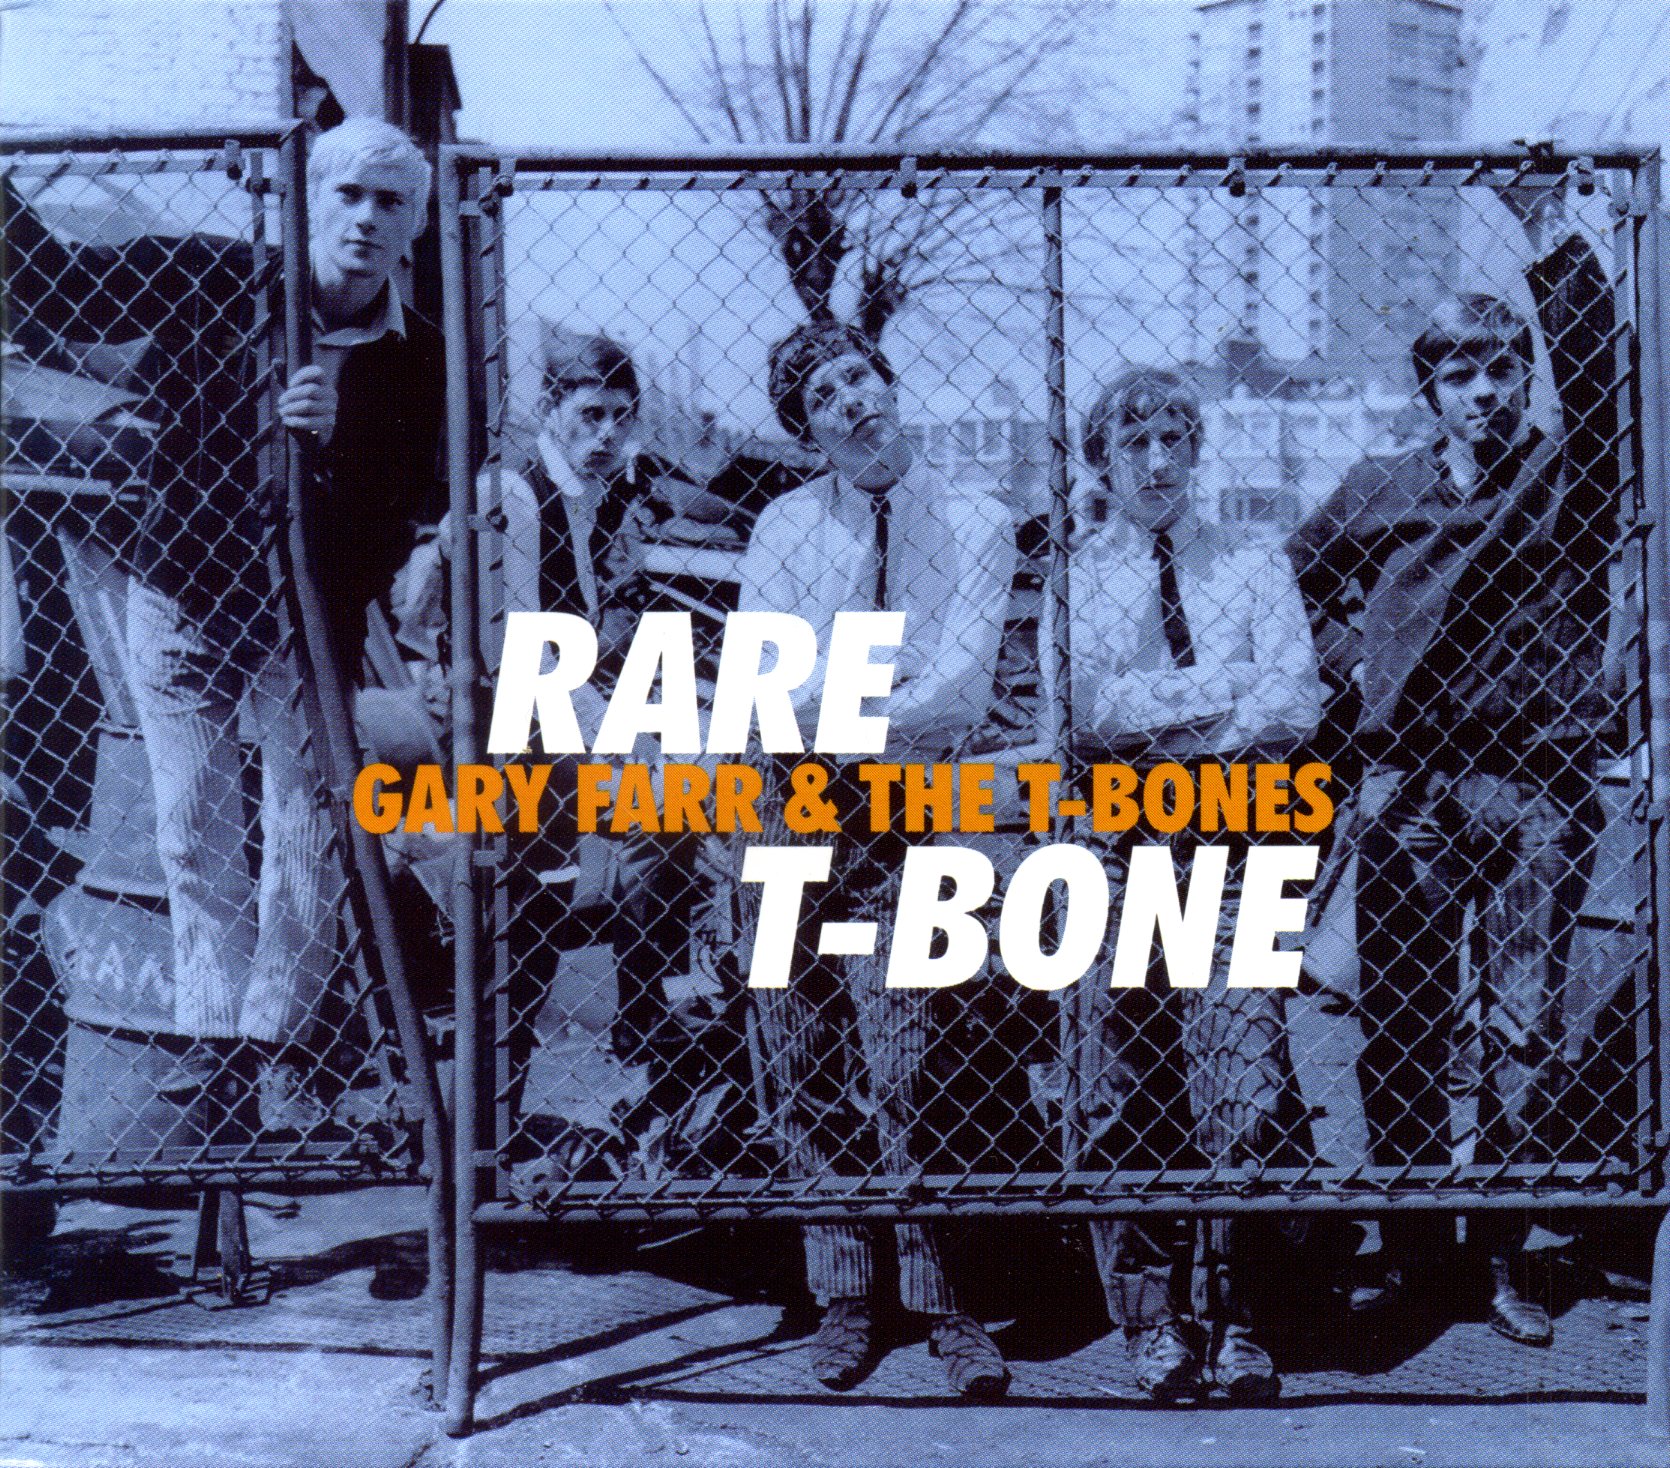 FARR, GARY & The T-BONES